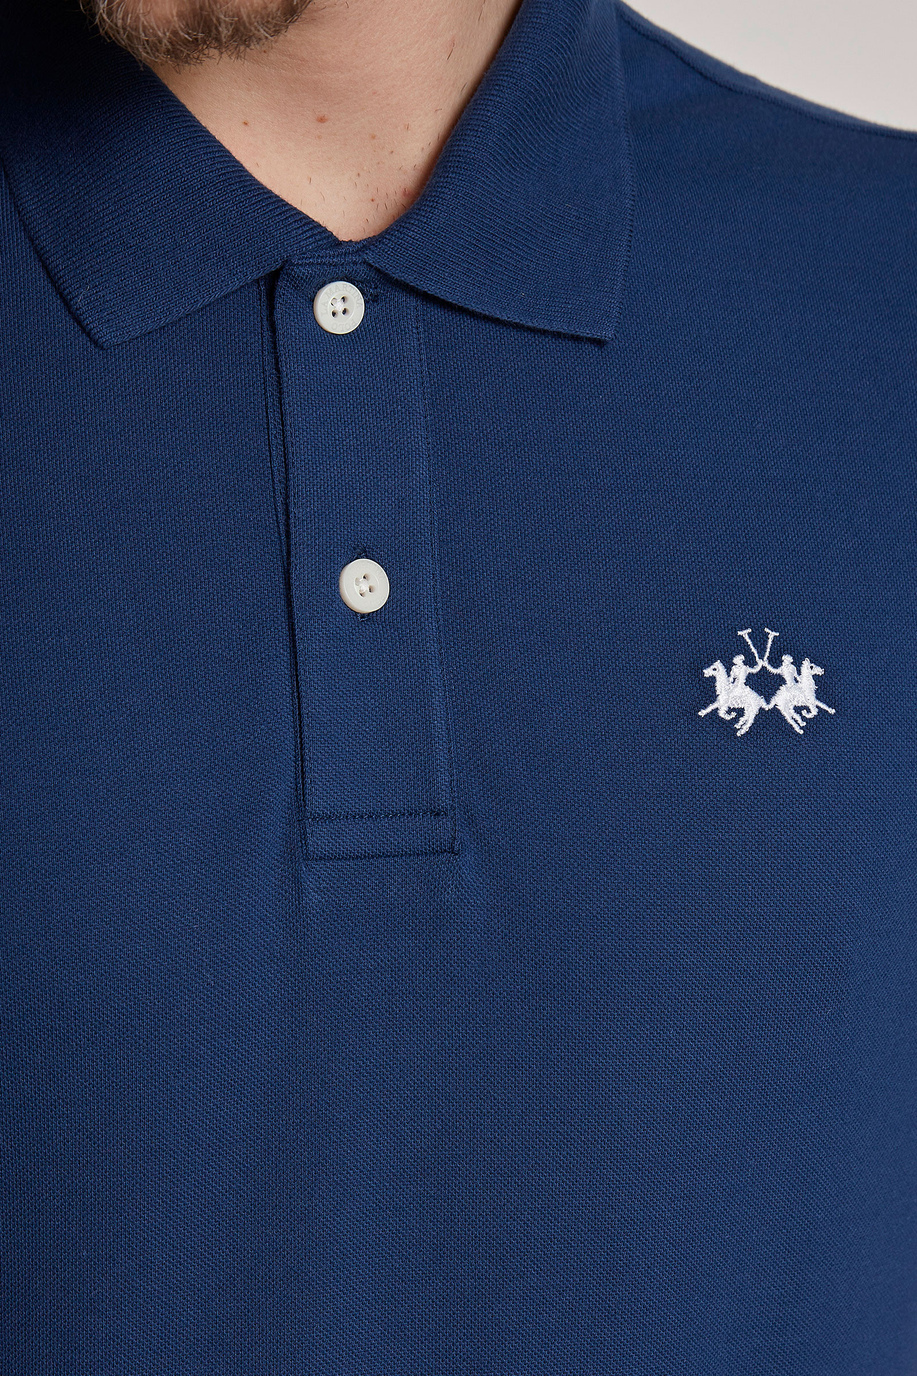 Kurzarm-Poloshirt mit geradem Schnitt für Herren - Tex - BP + BR + CC (all seasons - never on sale) | La Martina - Official Online Shop